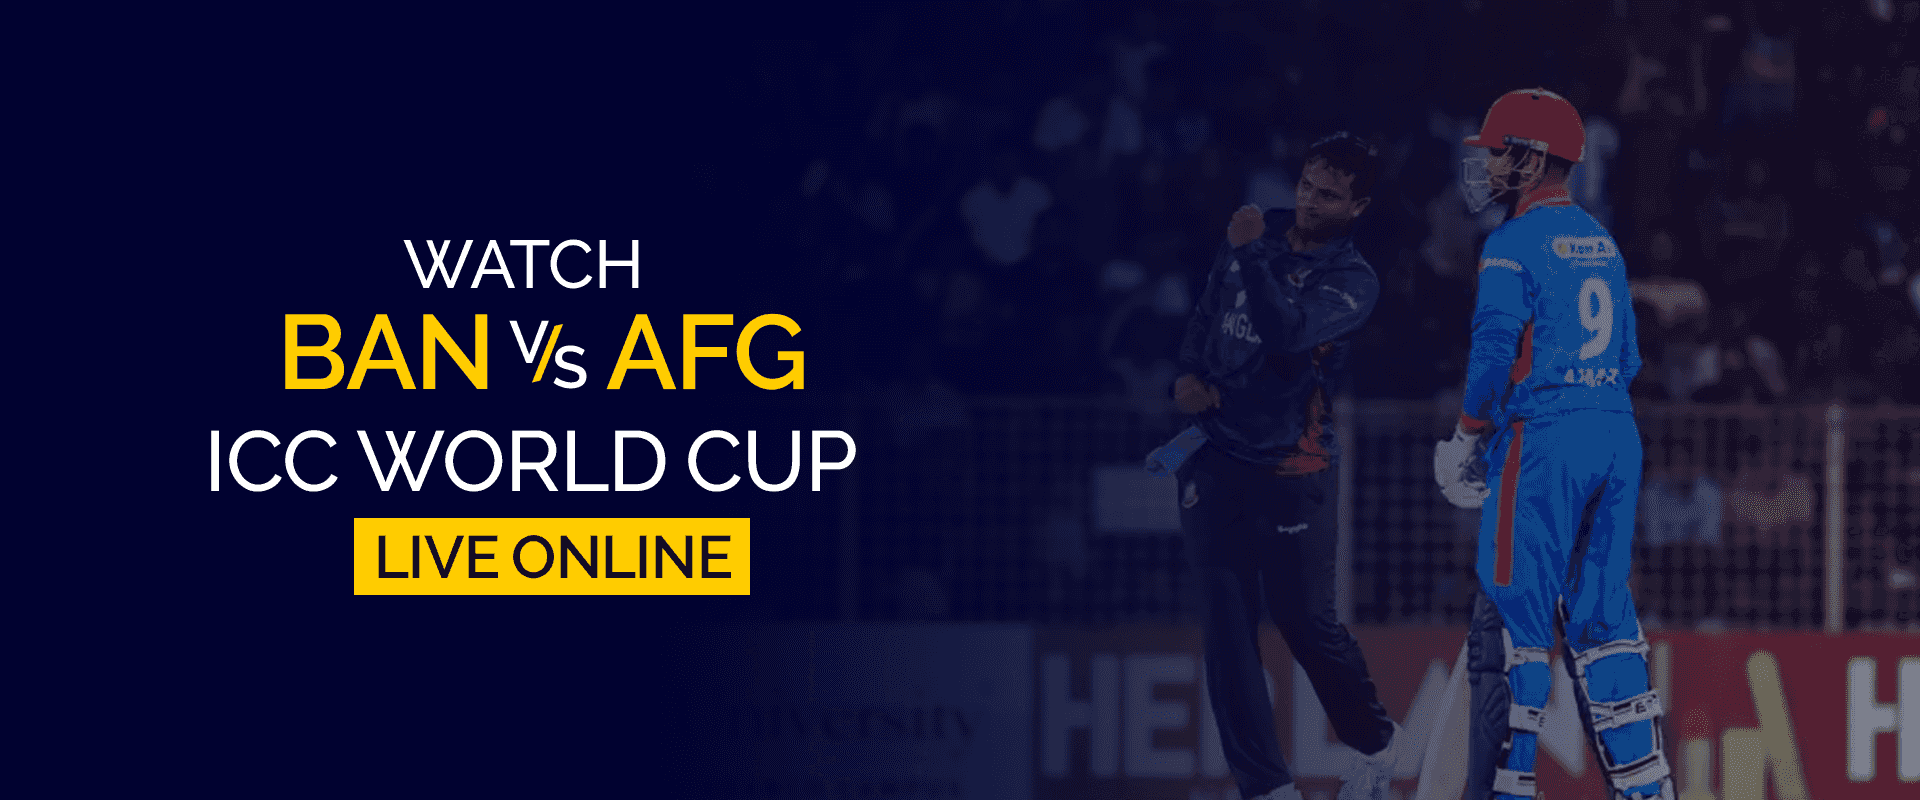 Assistir BAN x AFG ICC World Cup ao vivo online